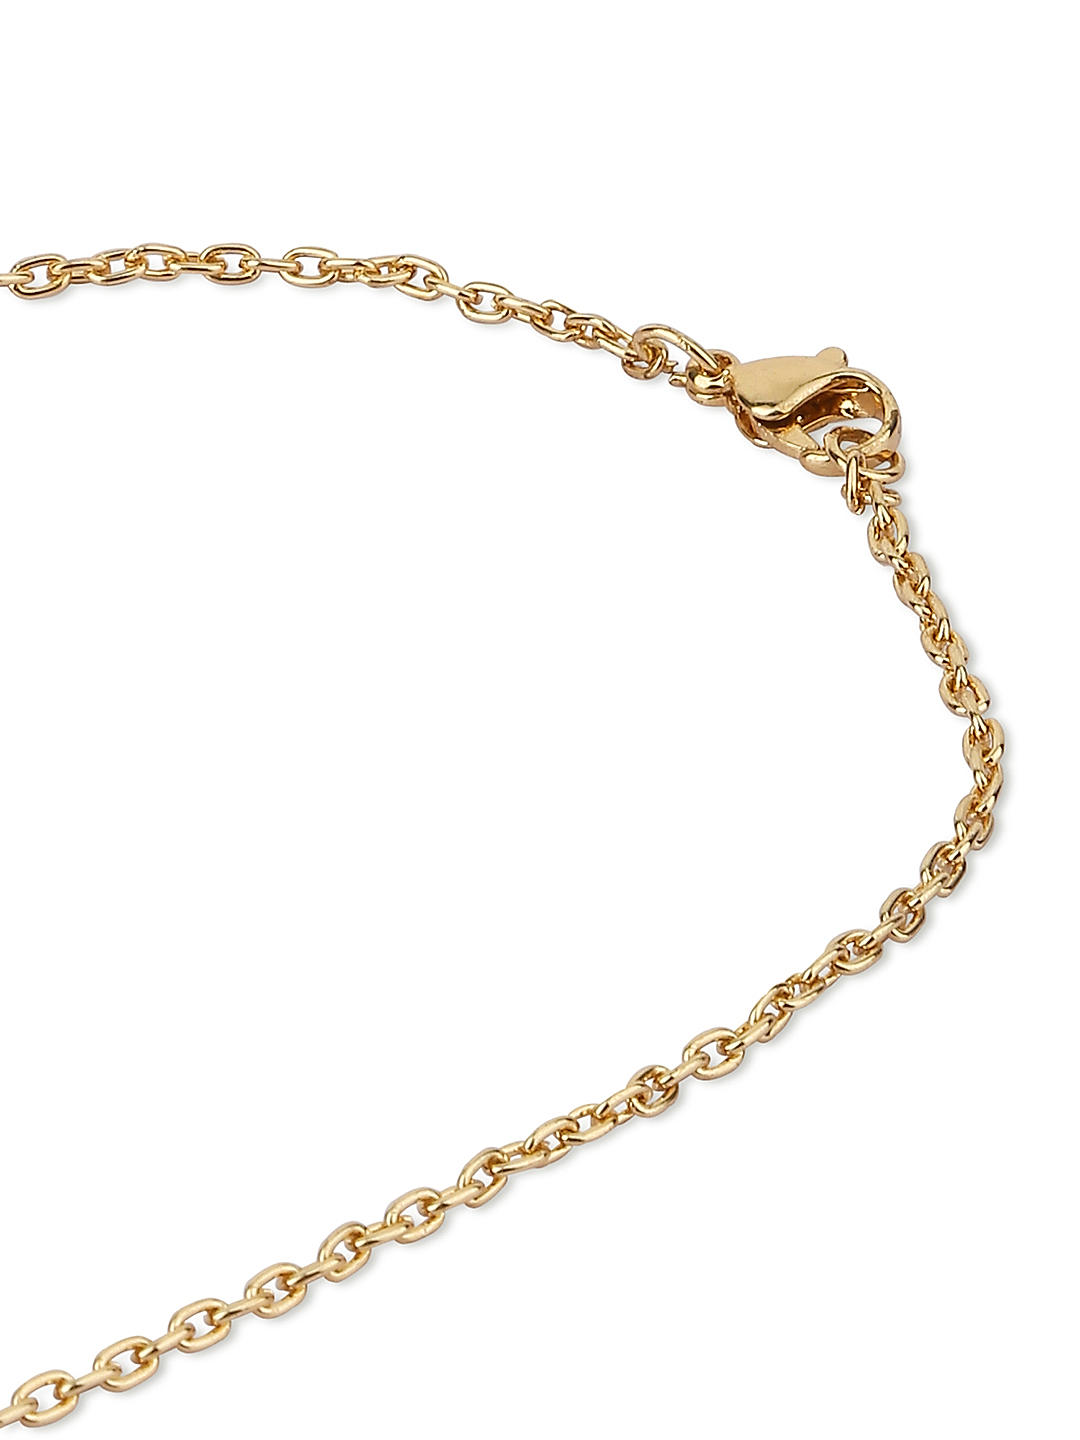 Buy Latest Gold Plated Hanging Designer Womens Bracelet Imitation Jewelry  Online